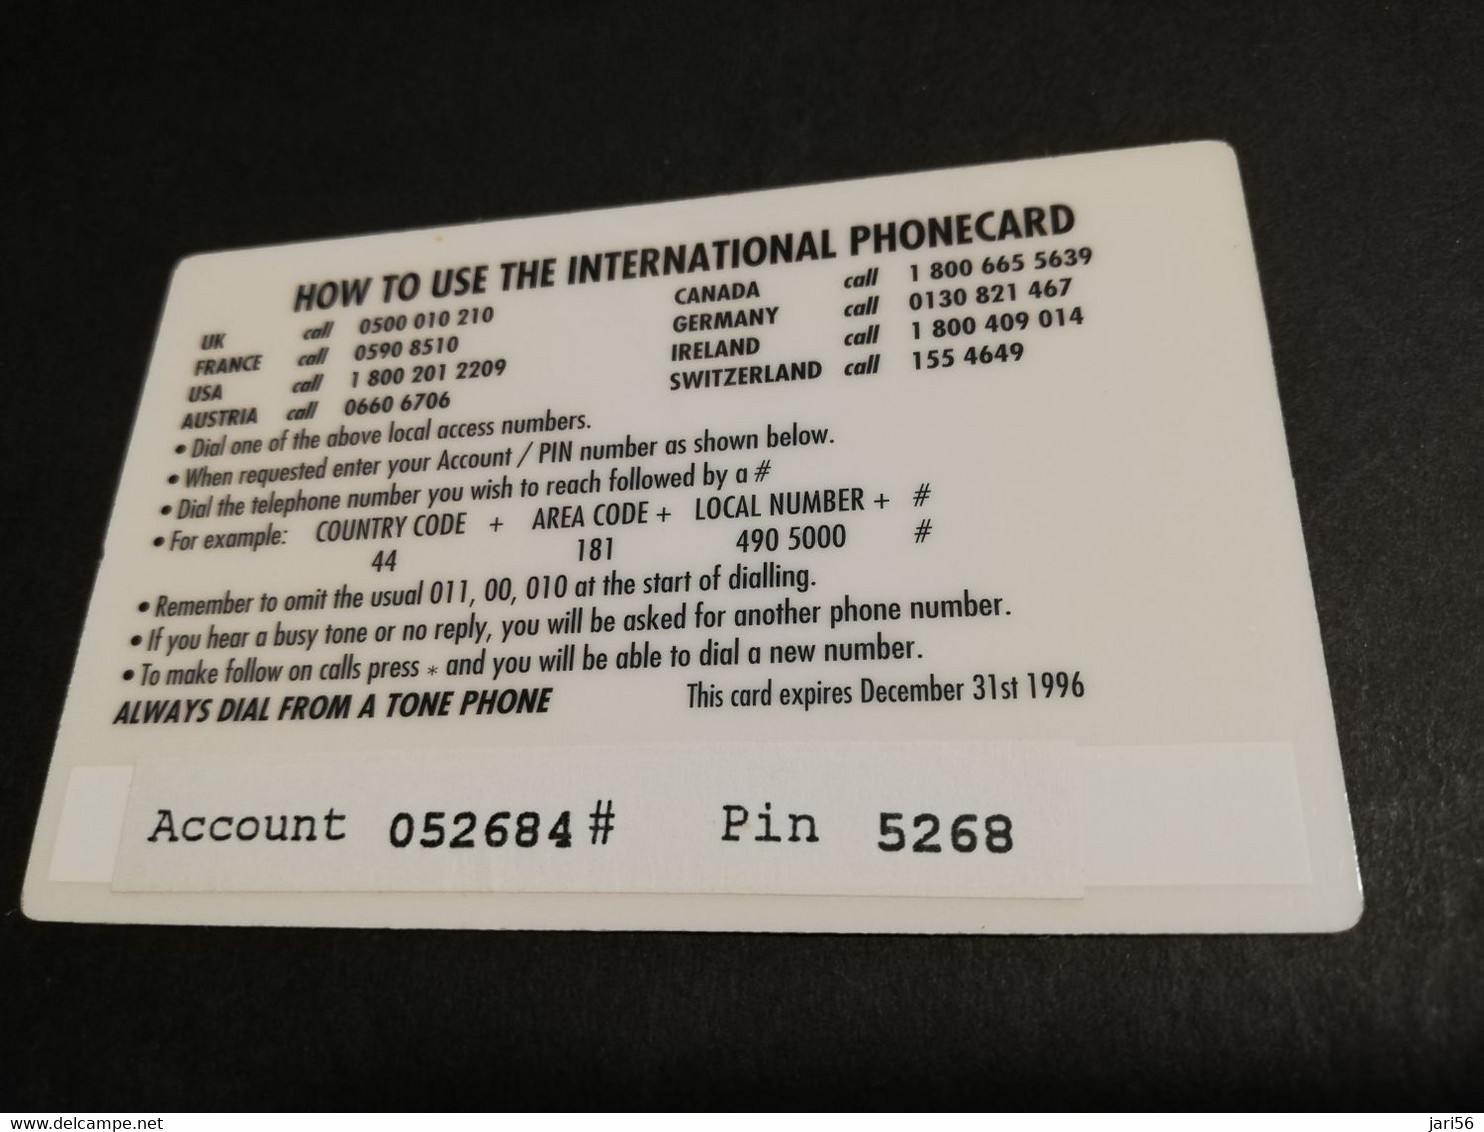 GREAT BRITAIN   3 POUND  AIR PLANES  B-17   DIT PHONECARD    PREPAID CARD      **5917** - [10] Colecciones